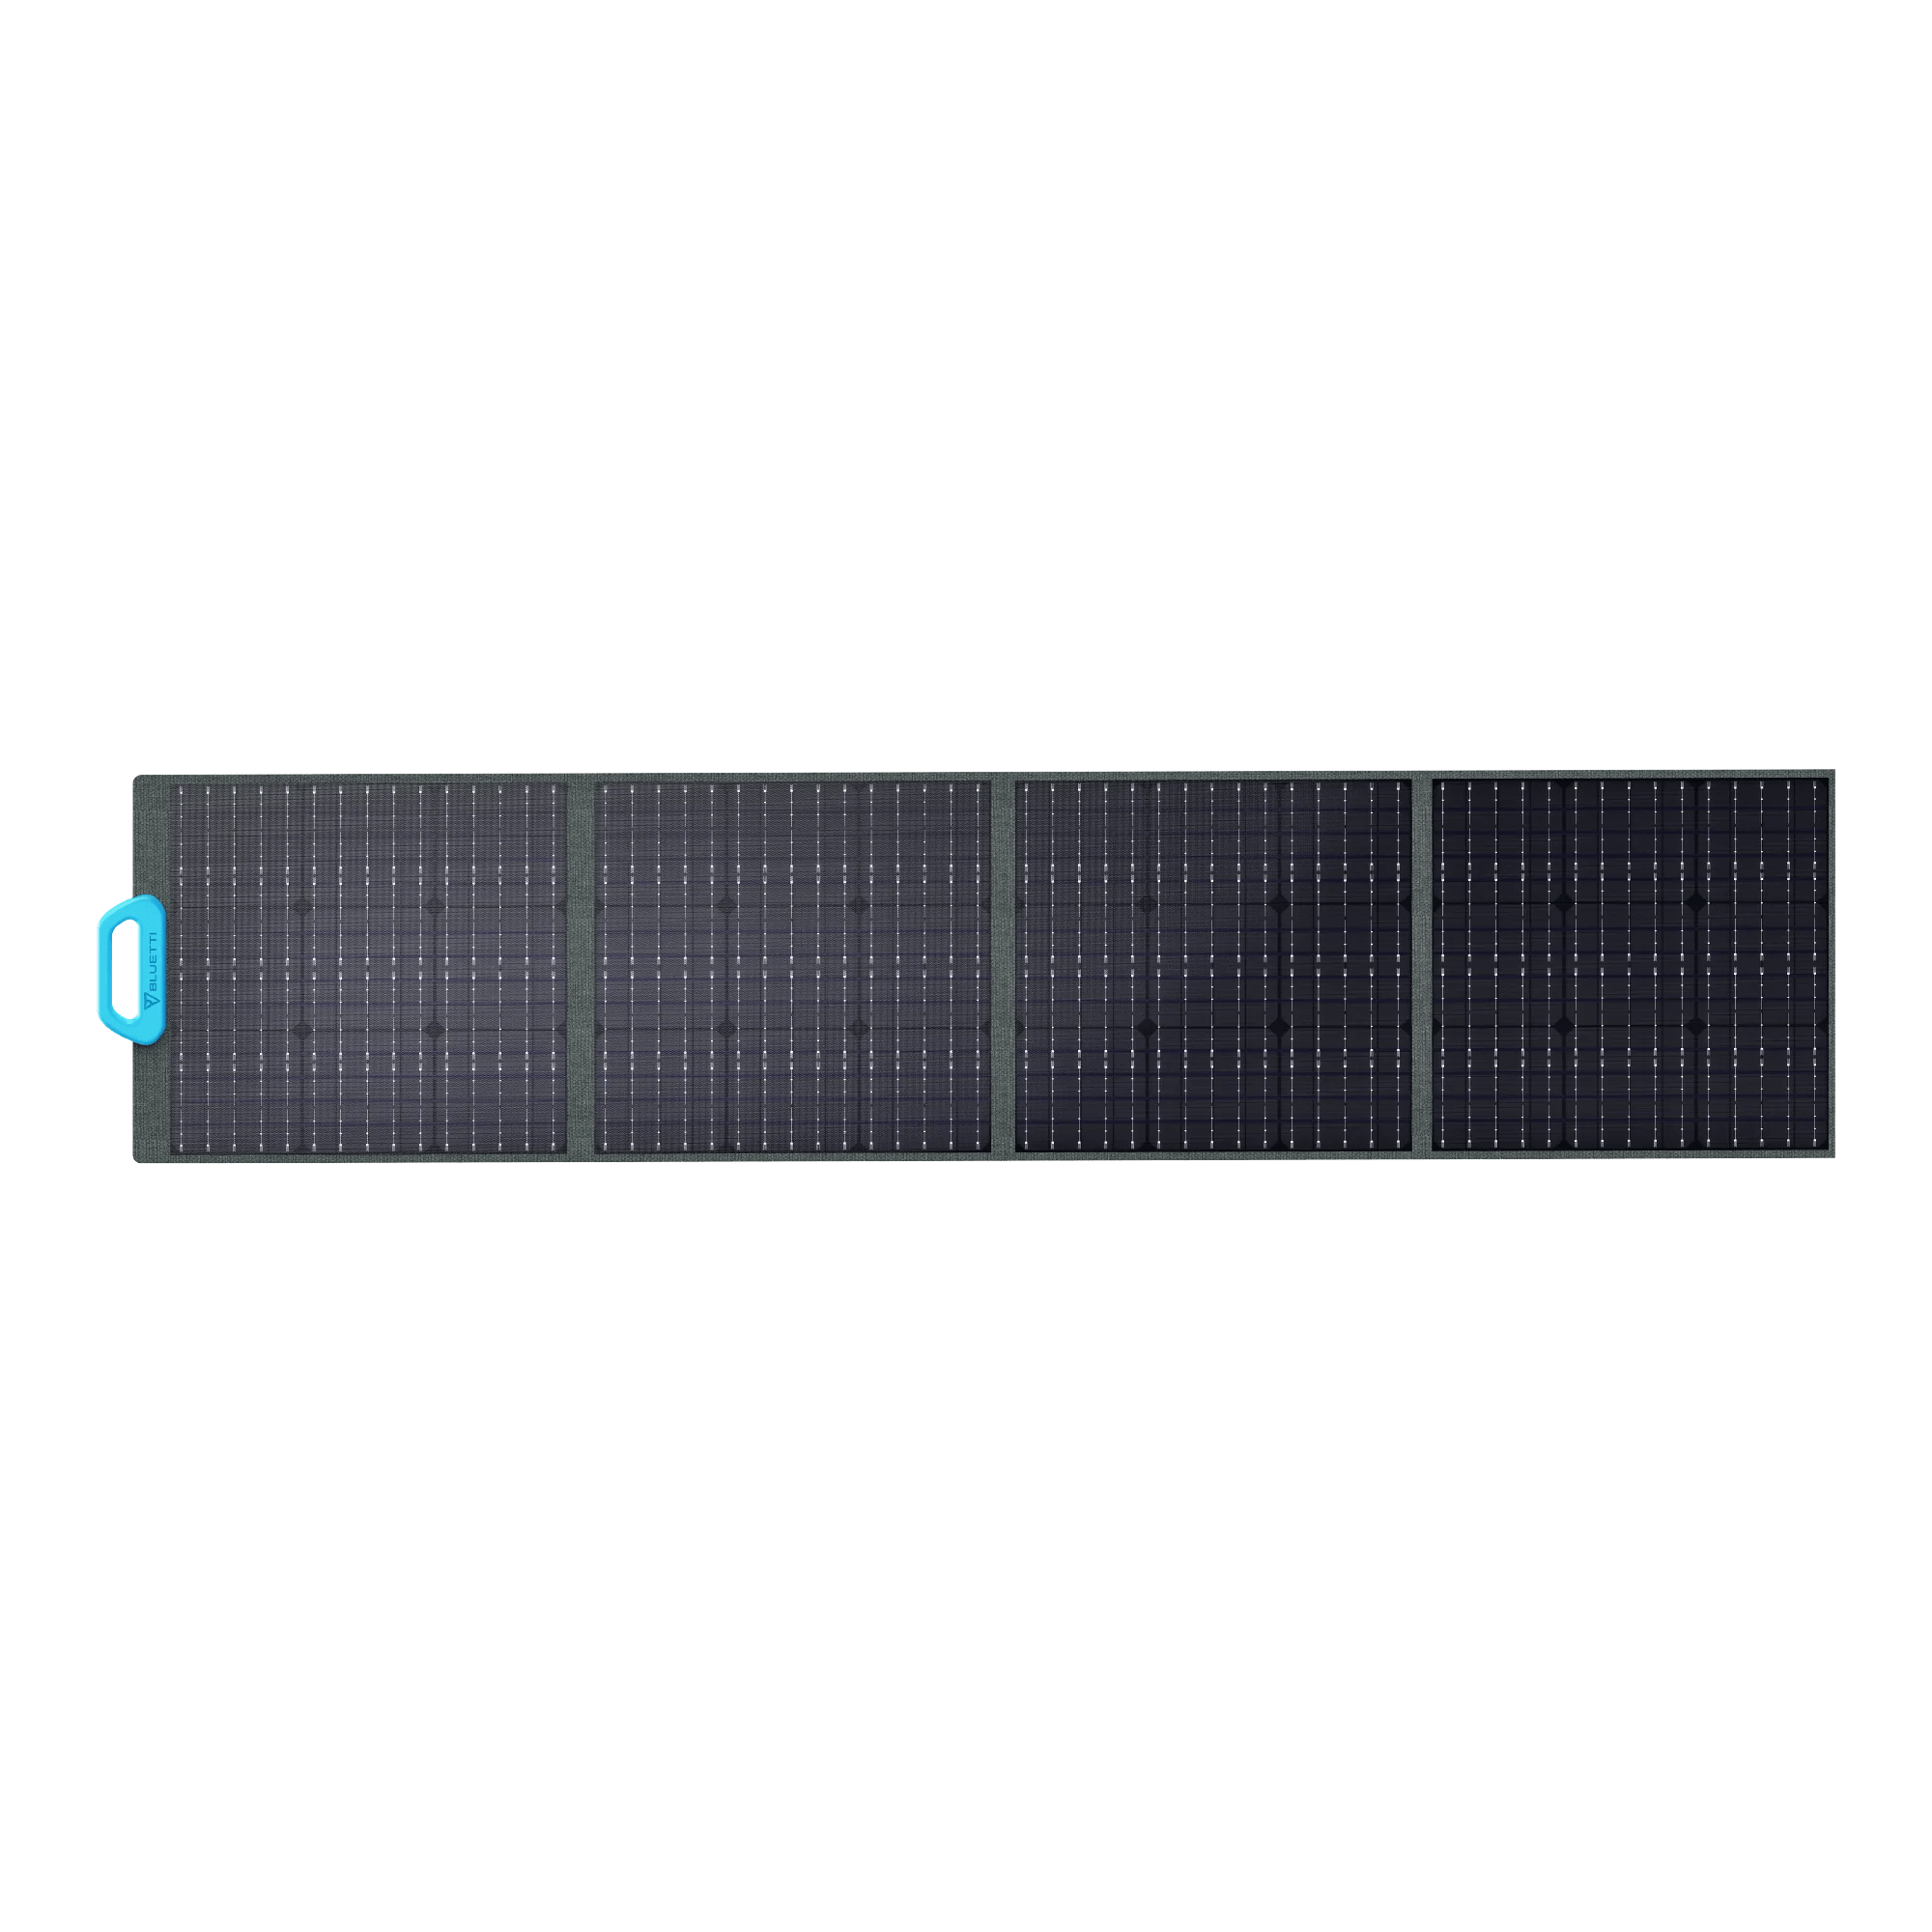 Bluetti Solar Panels Bluetti PV200 Solar Panel | 200W